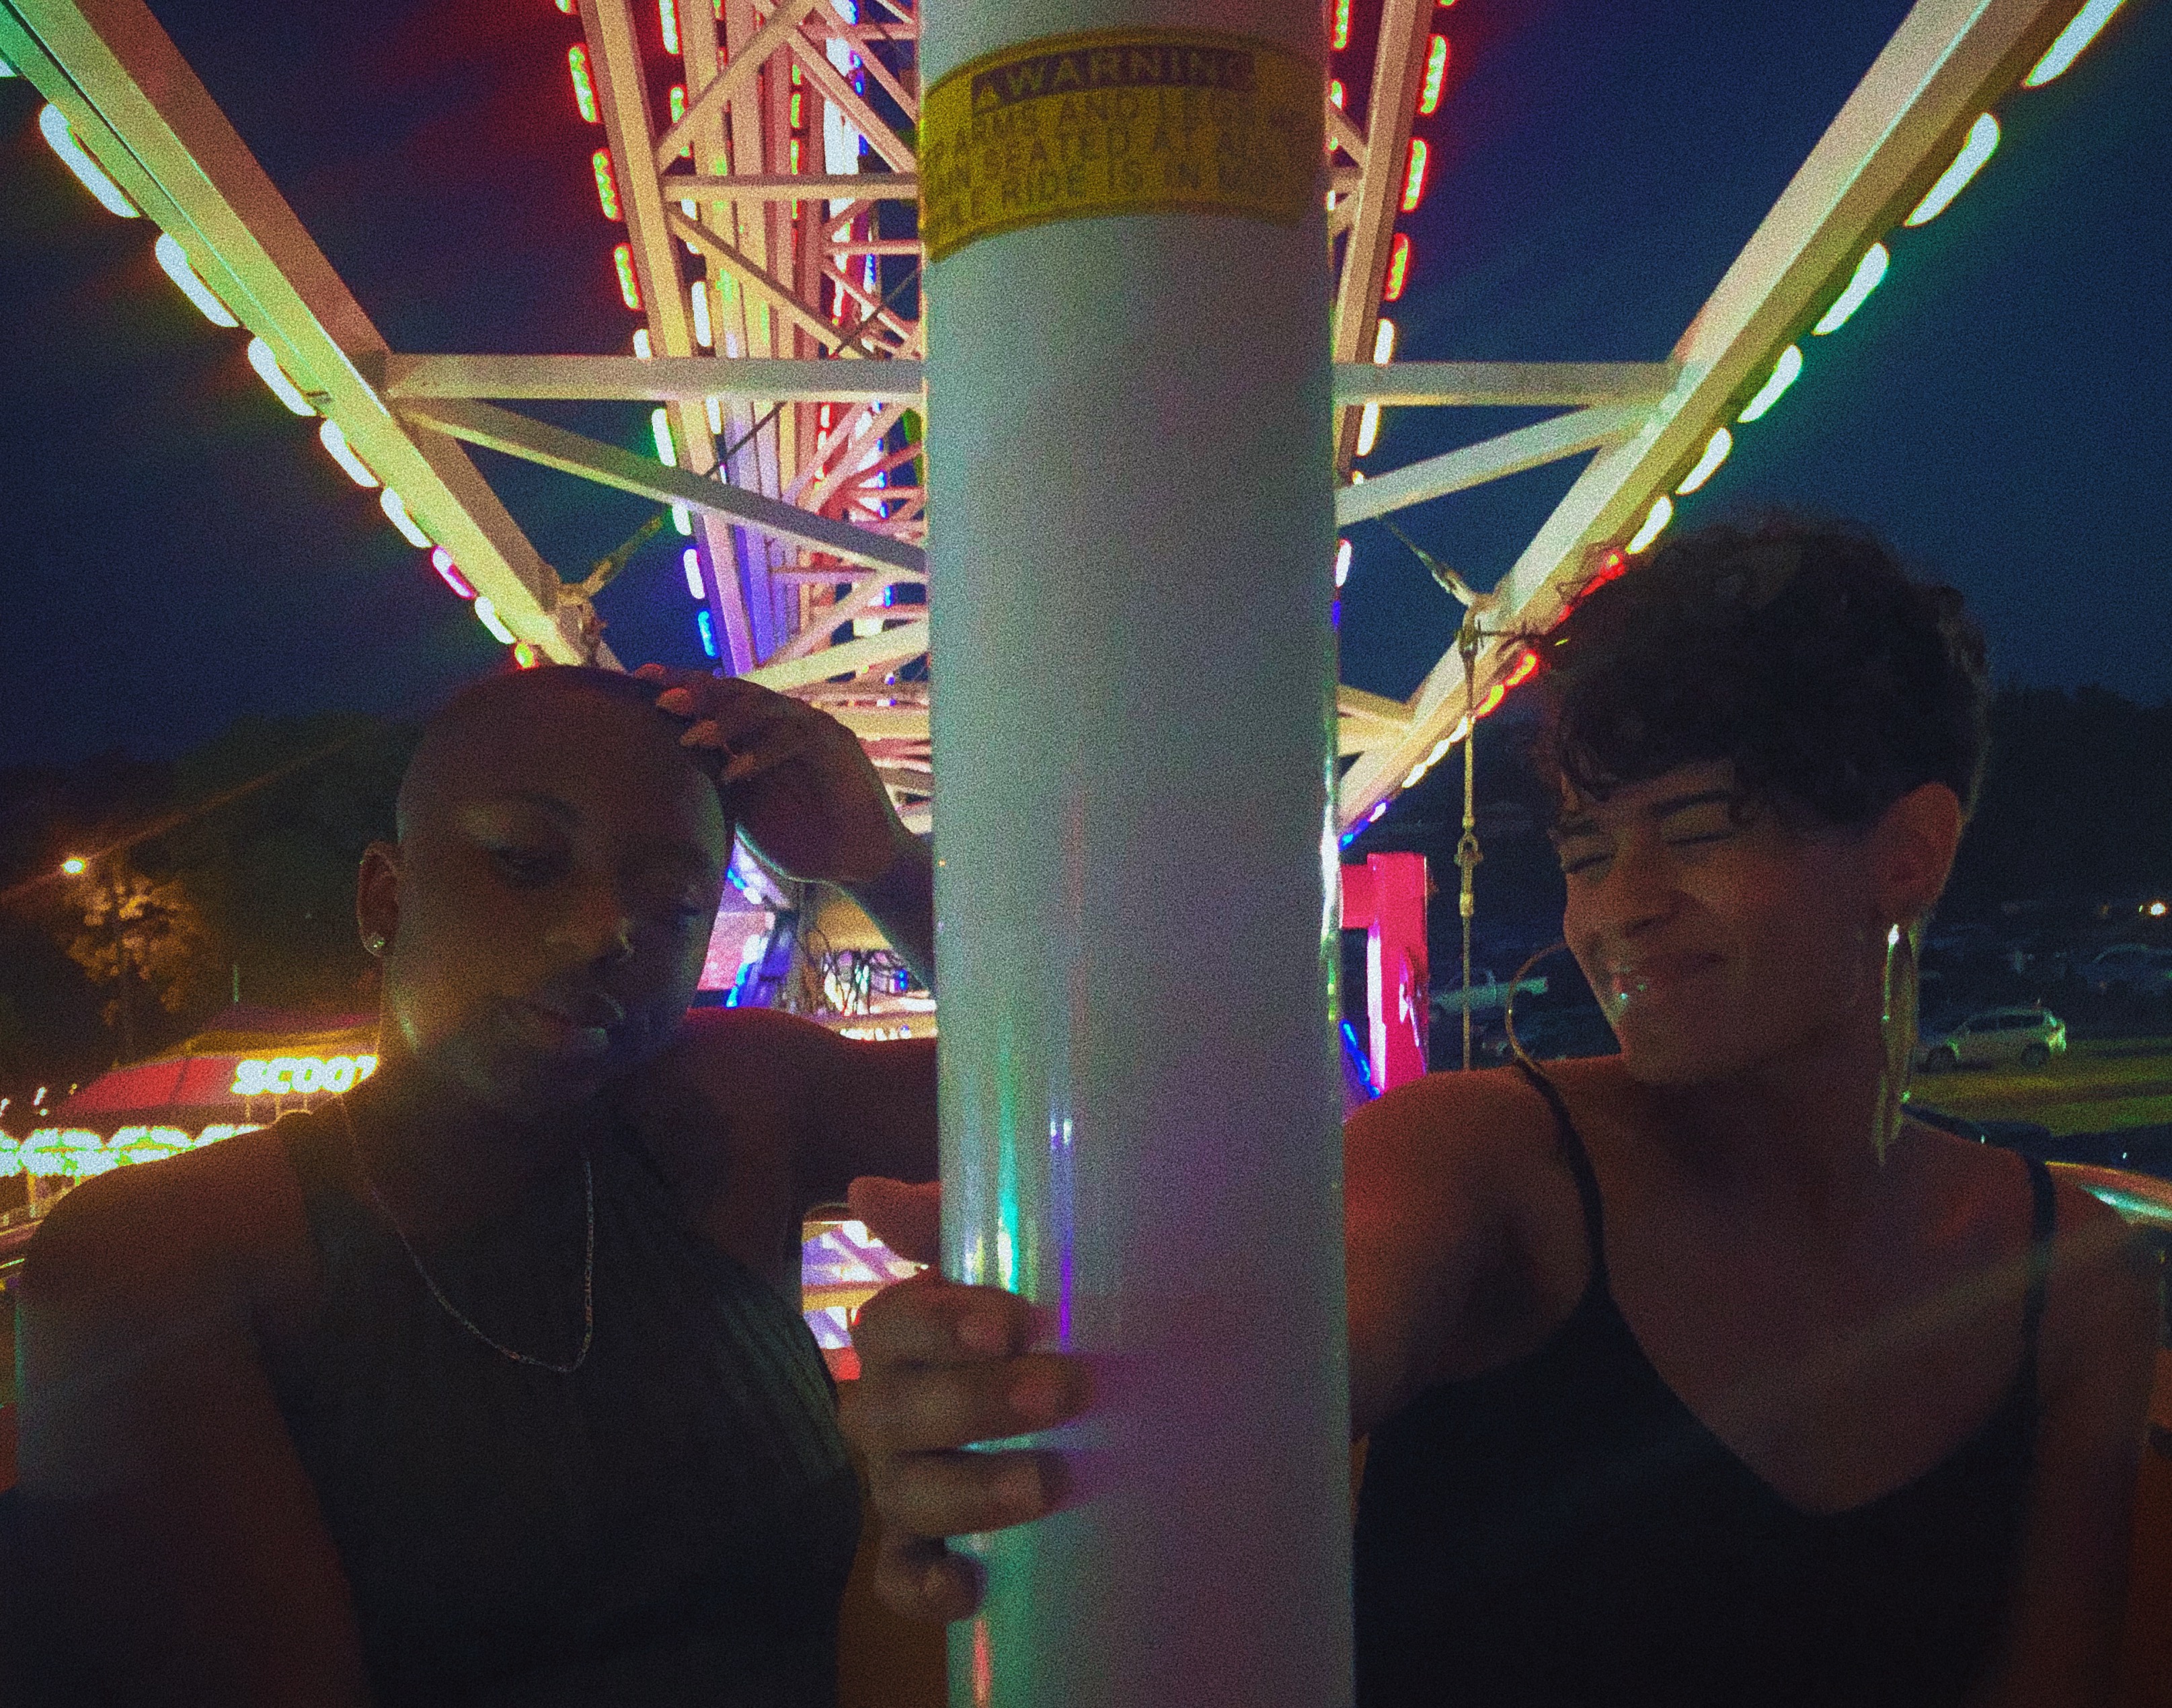 Two friends on a ferris wheel at an amusement park.